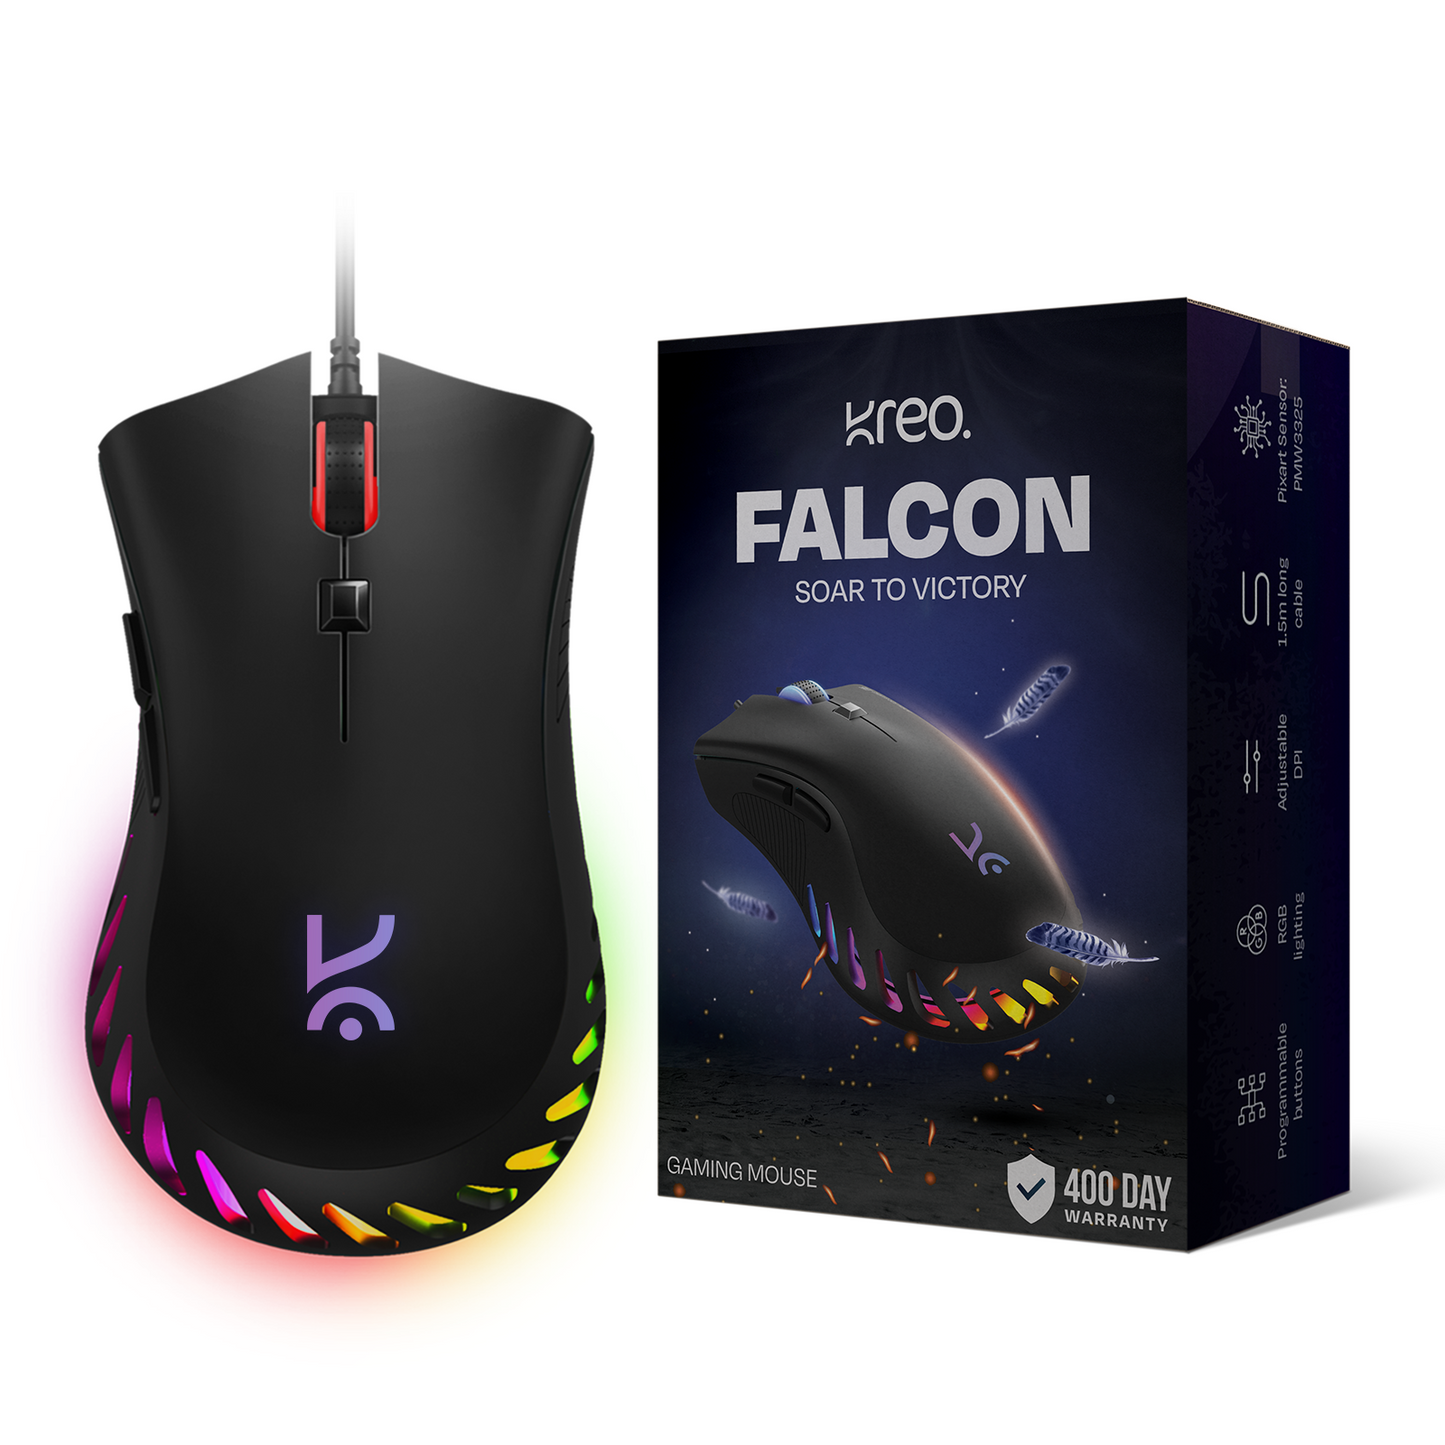 Falcon Gaming Mouse Kreo